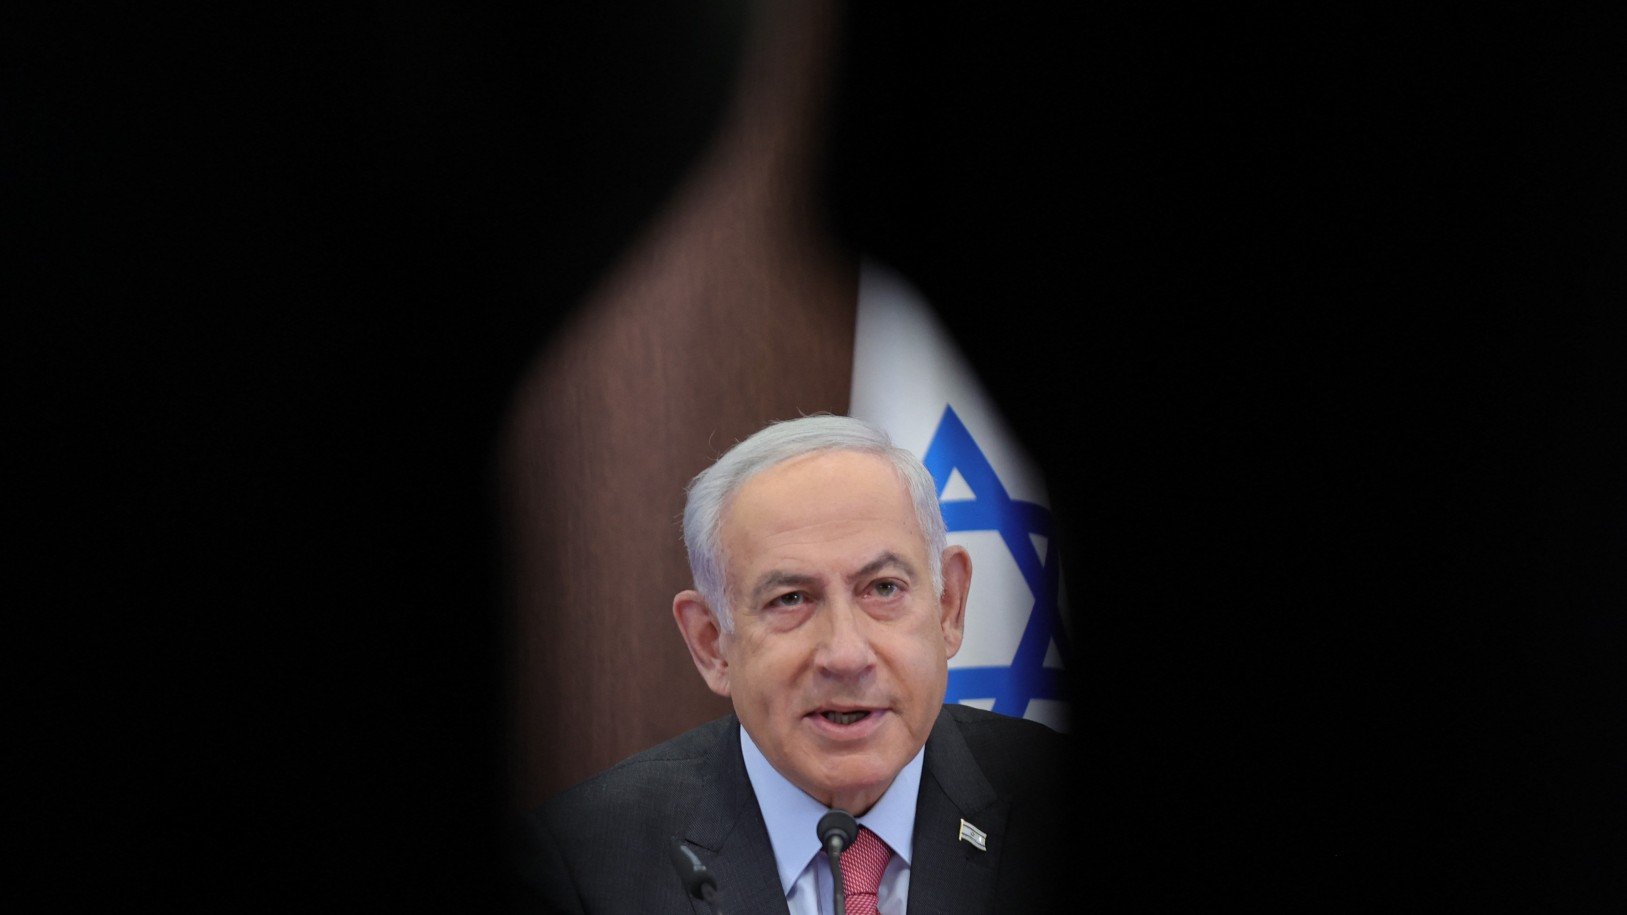 Guerra di Gaza, gli 007 egiziani: "Netanyahu era stato avvisato ma ha ignorato gli avvertimenti"